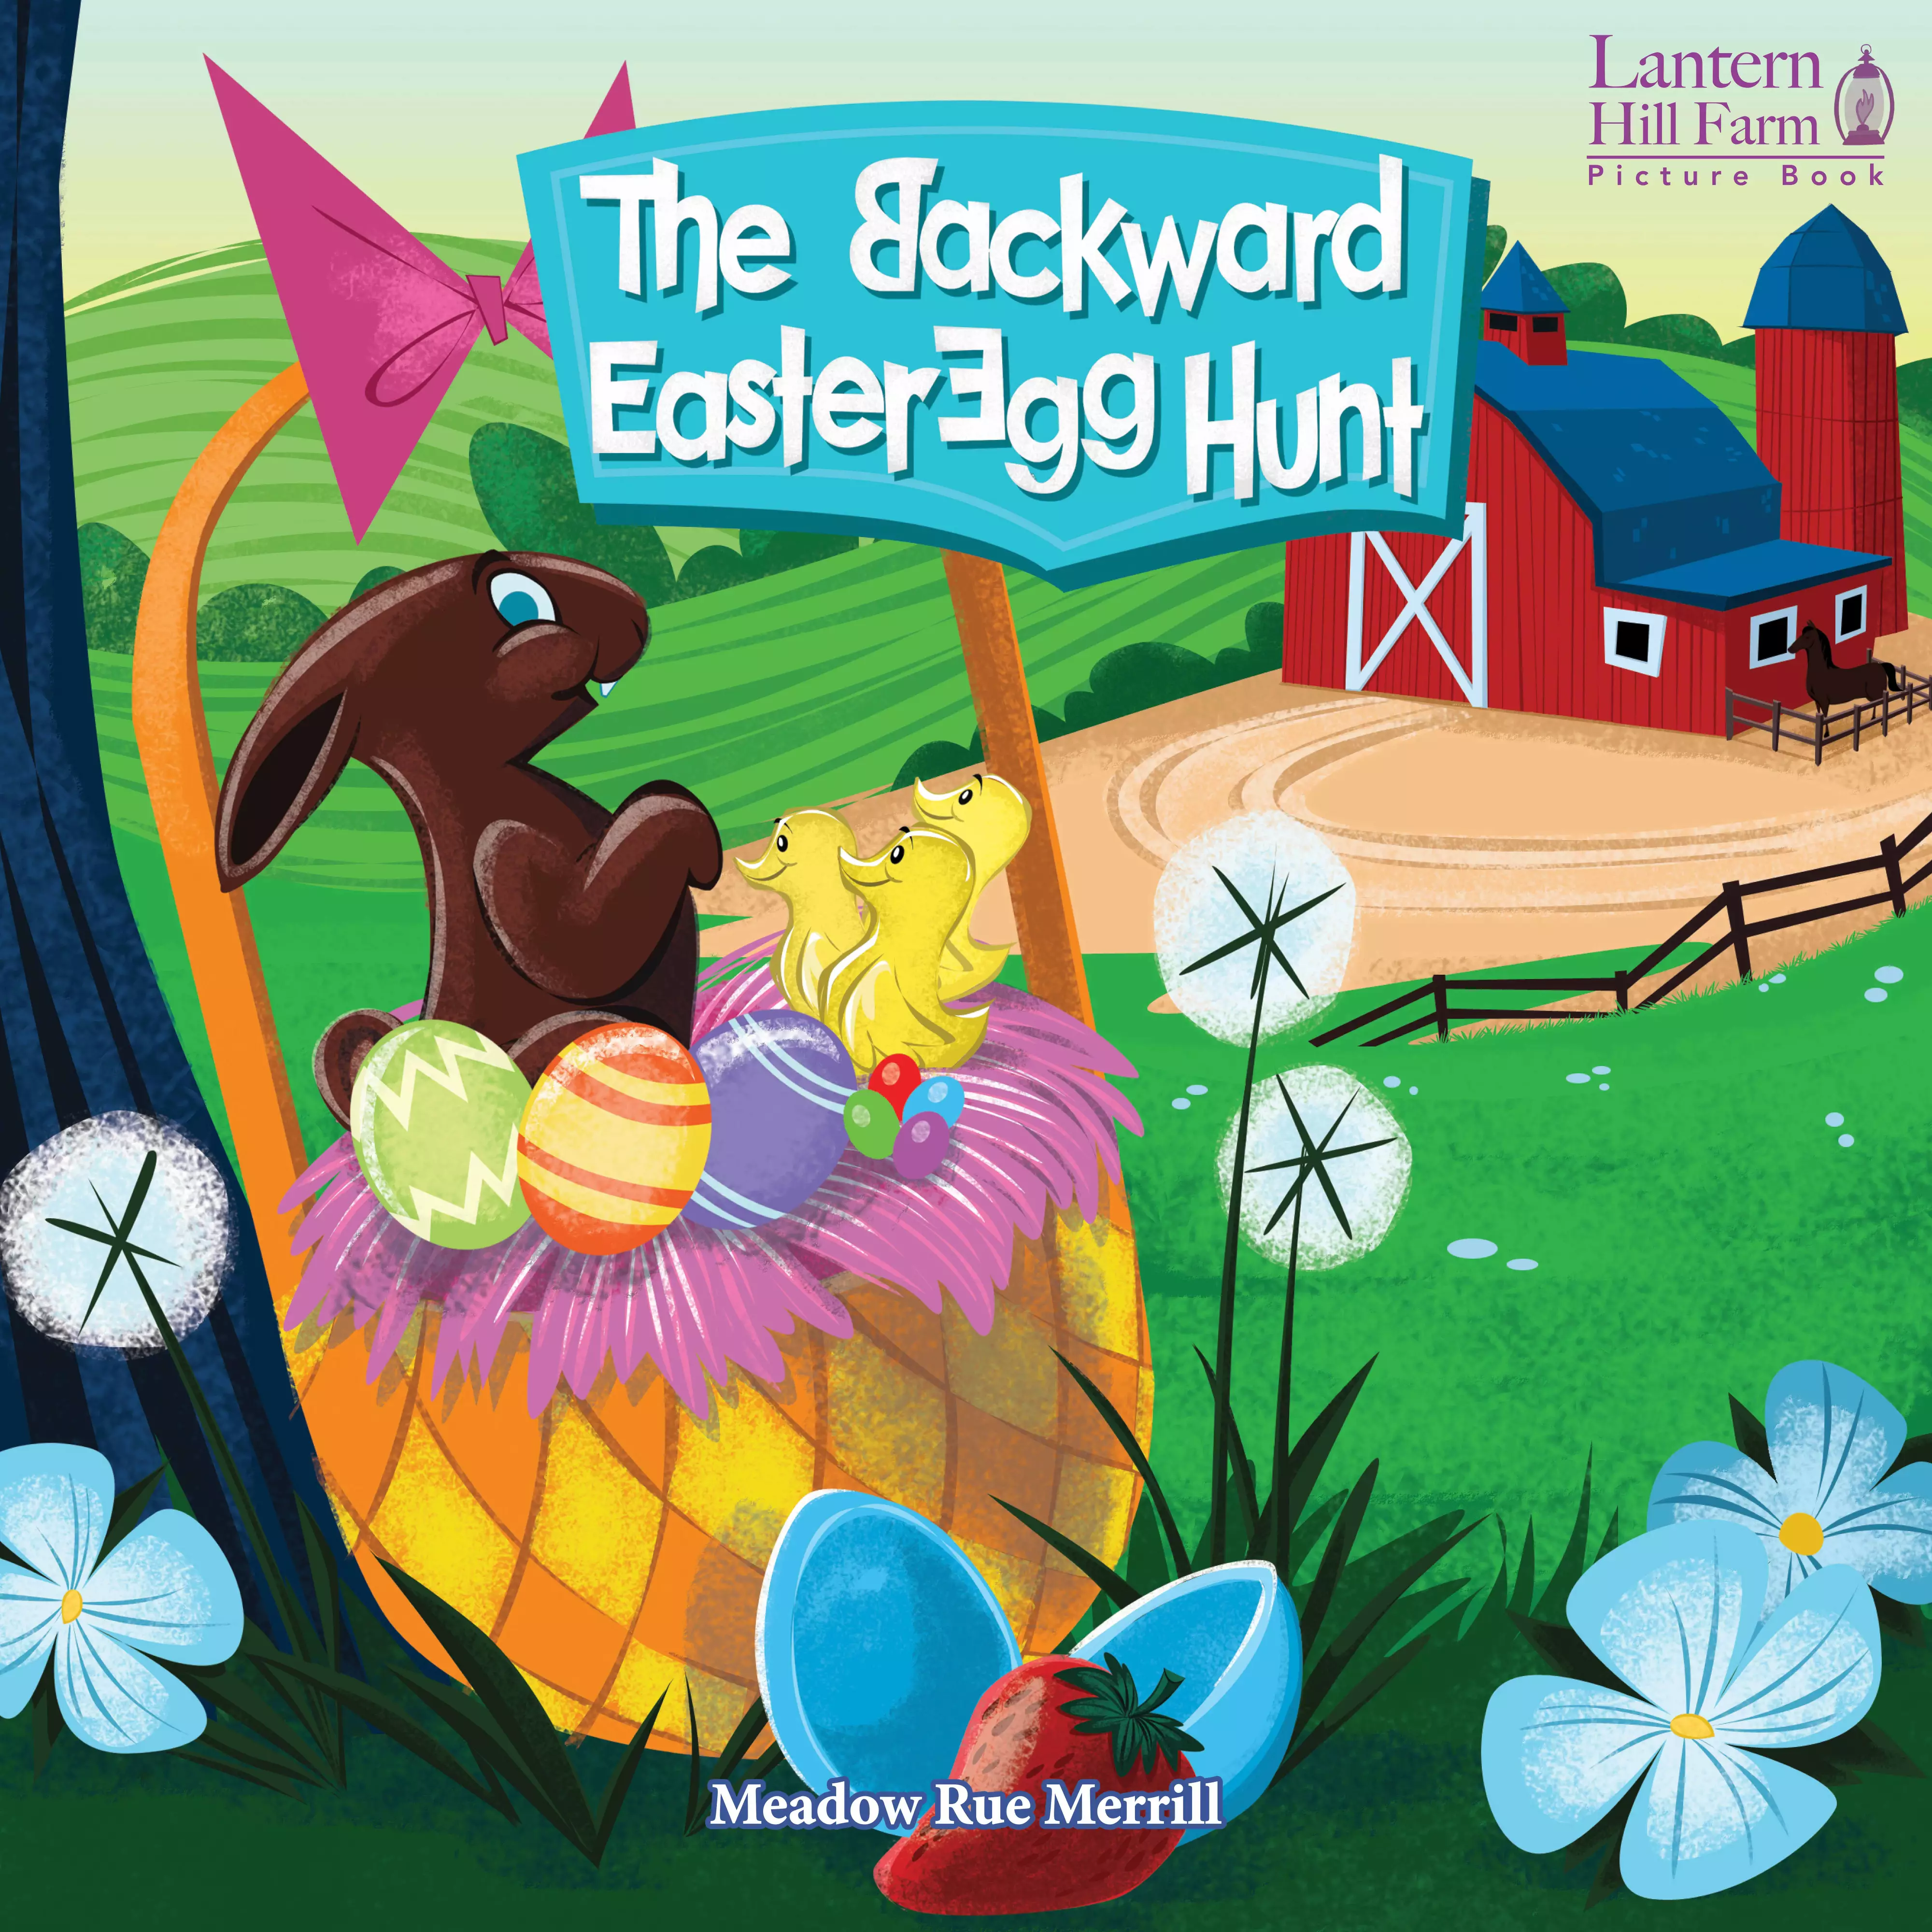 KIDZ: LHF Backward Easter Pic Book